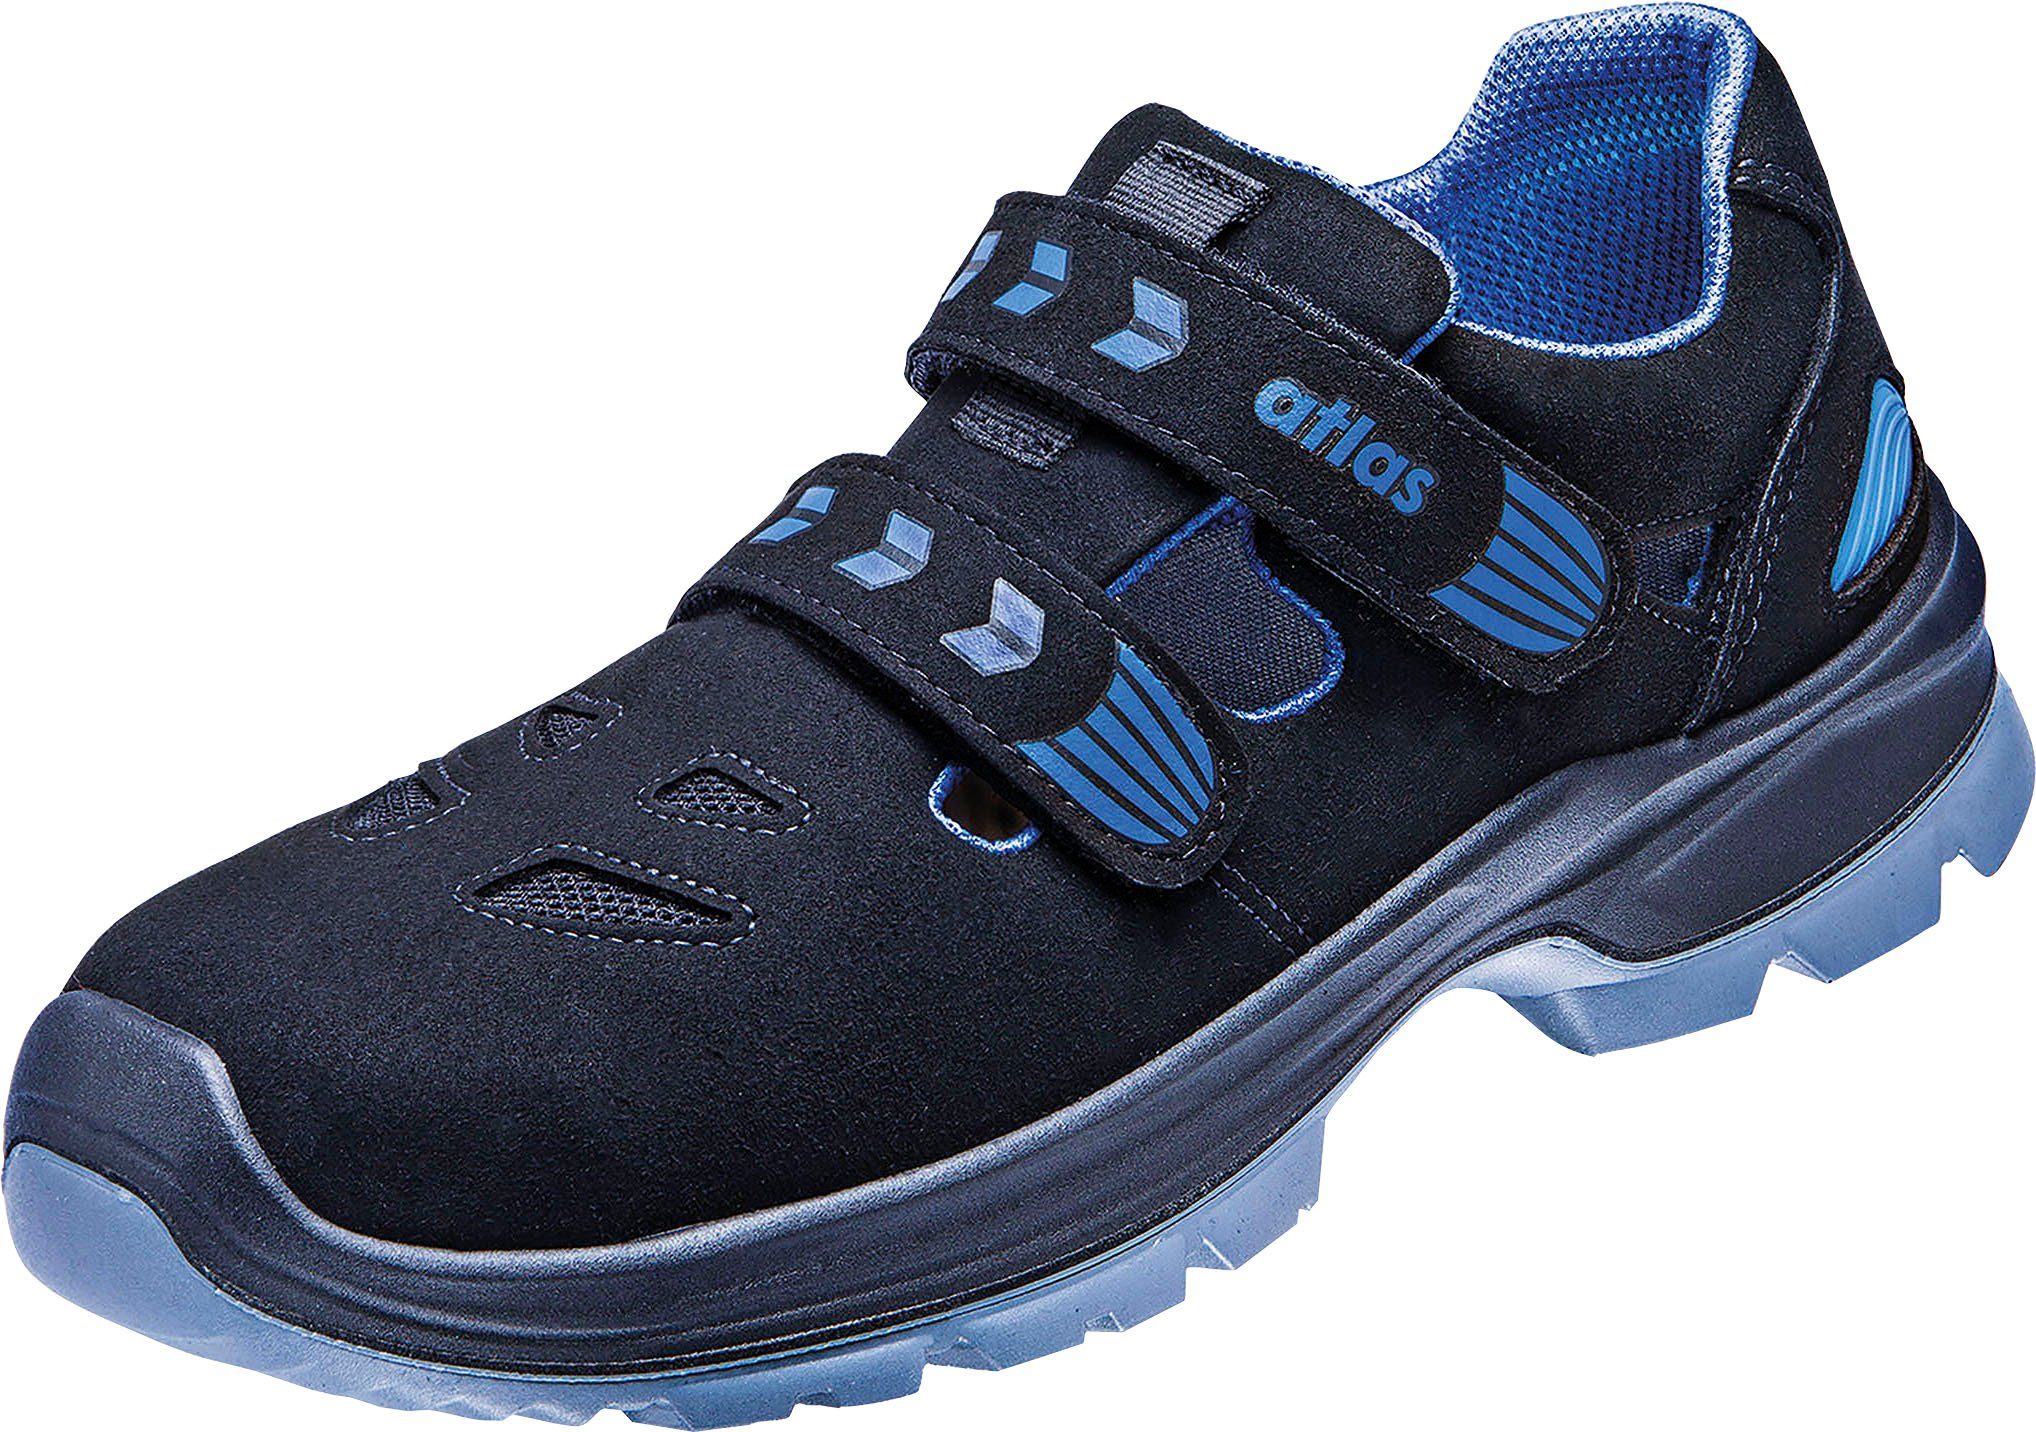 Atlas Schuhe Ergo-Med 360 Sicherheitsschuh Sandale, Schuhweite 12, Sicherheitsklasse S1 | Sicherheitsschuhe